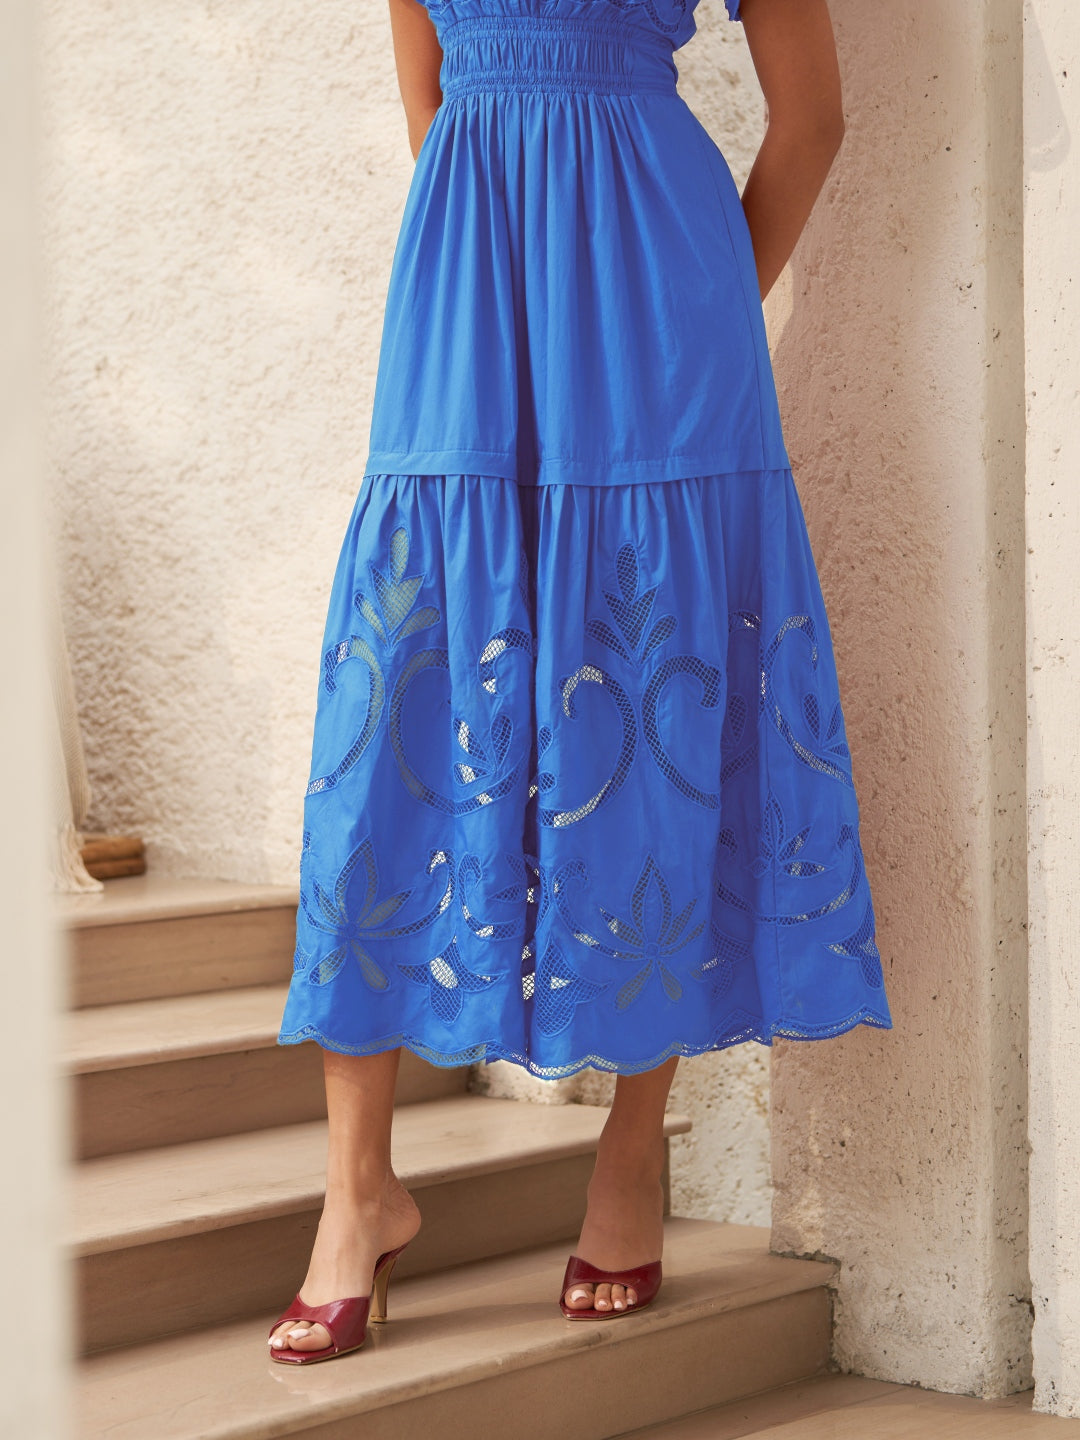 Ava Blue Dress